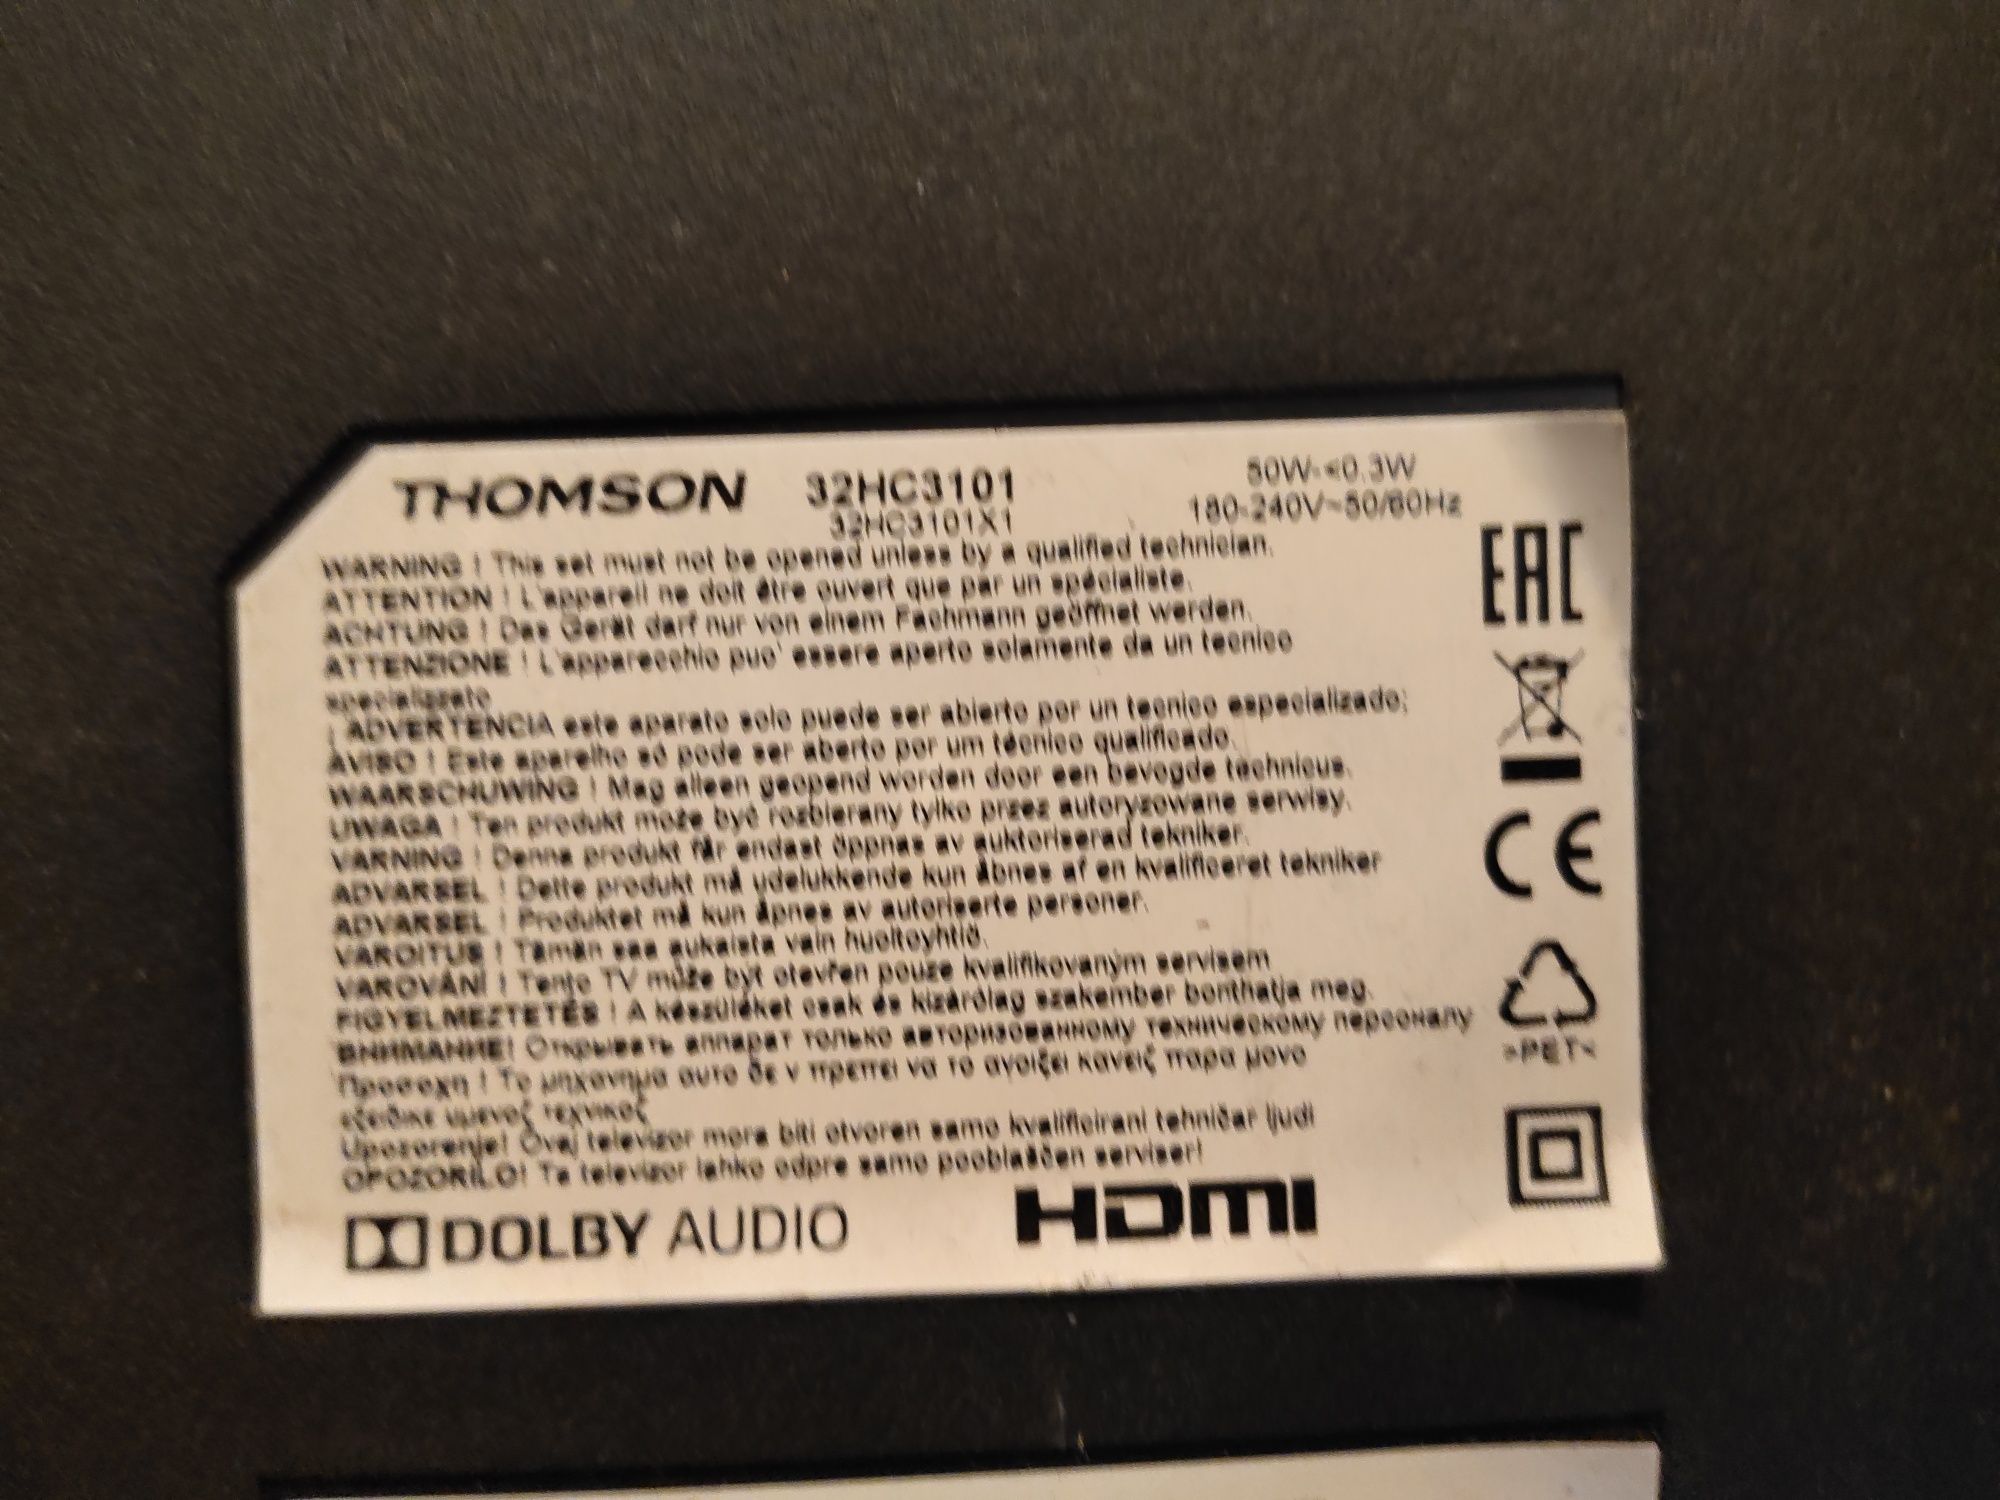 Telewizor Thomson 32hc3101